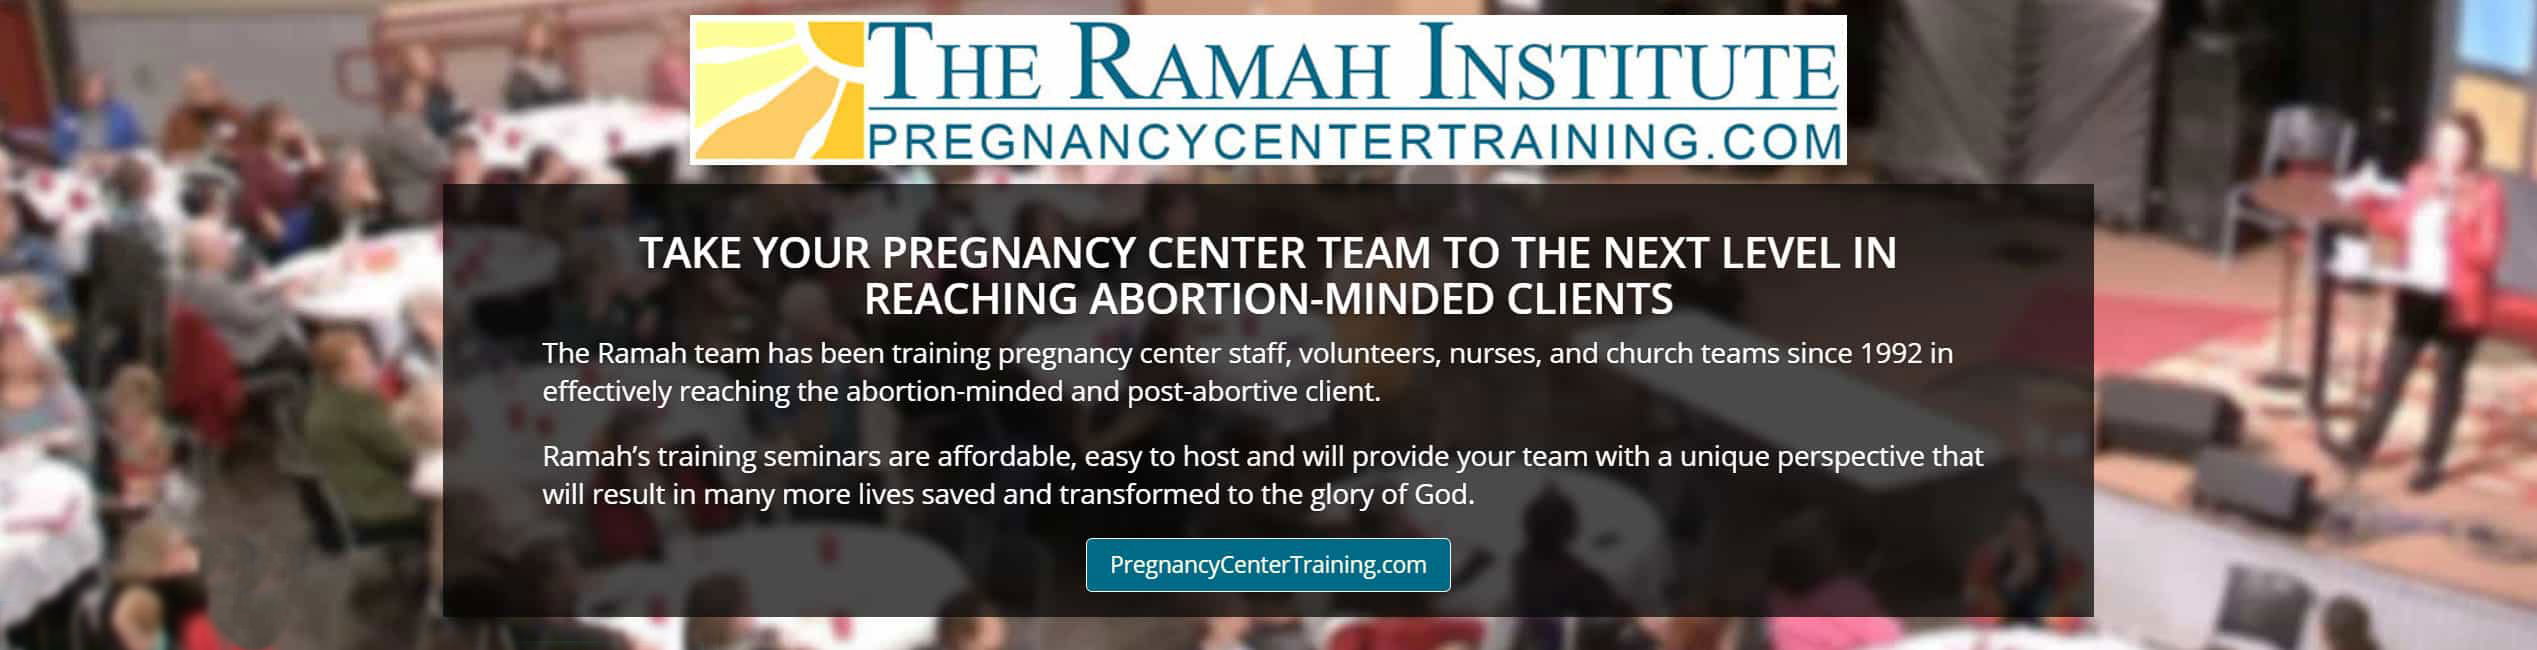 Pregnancy Center Training